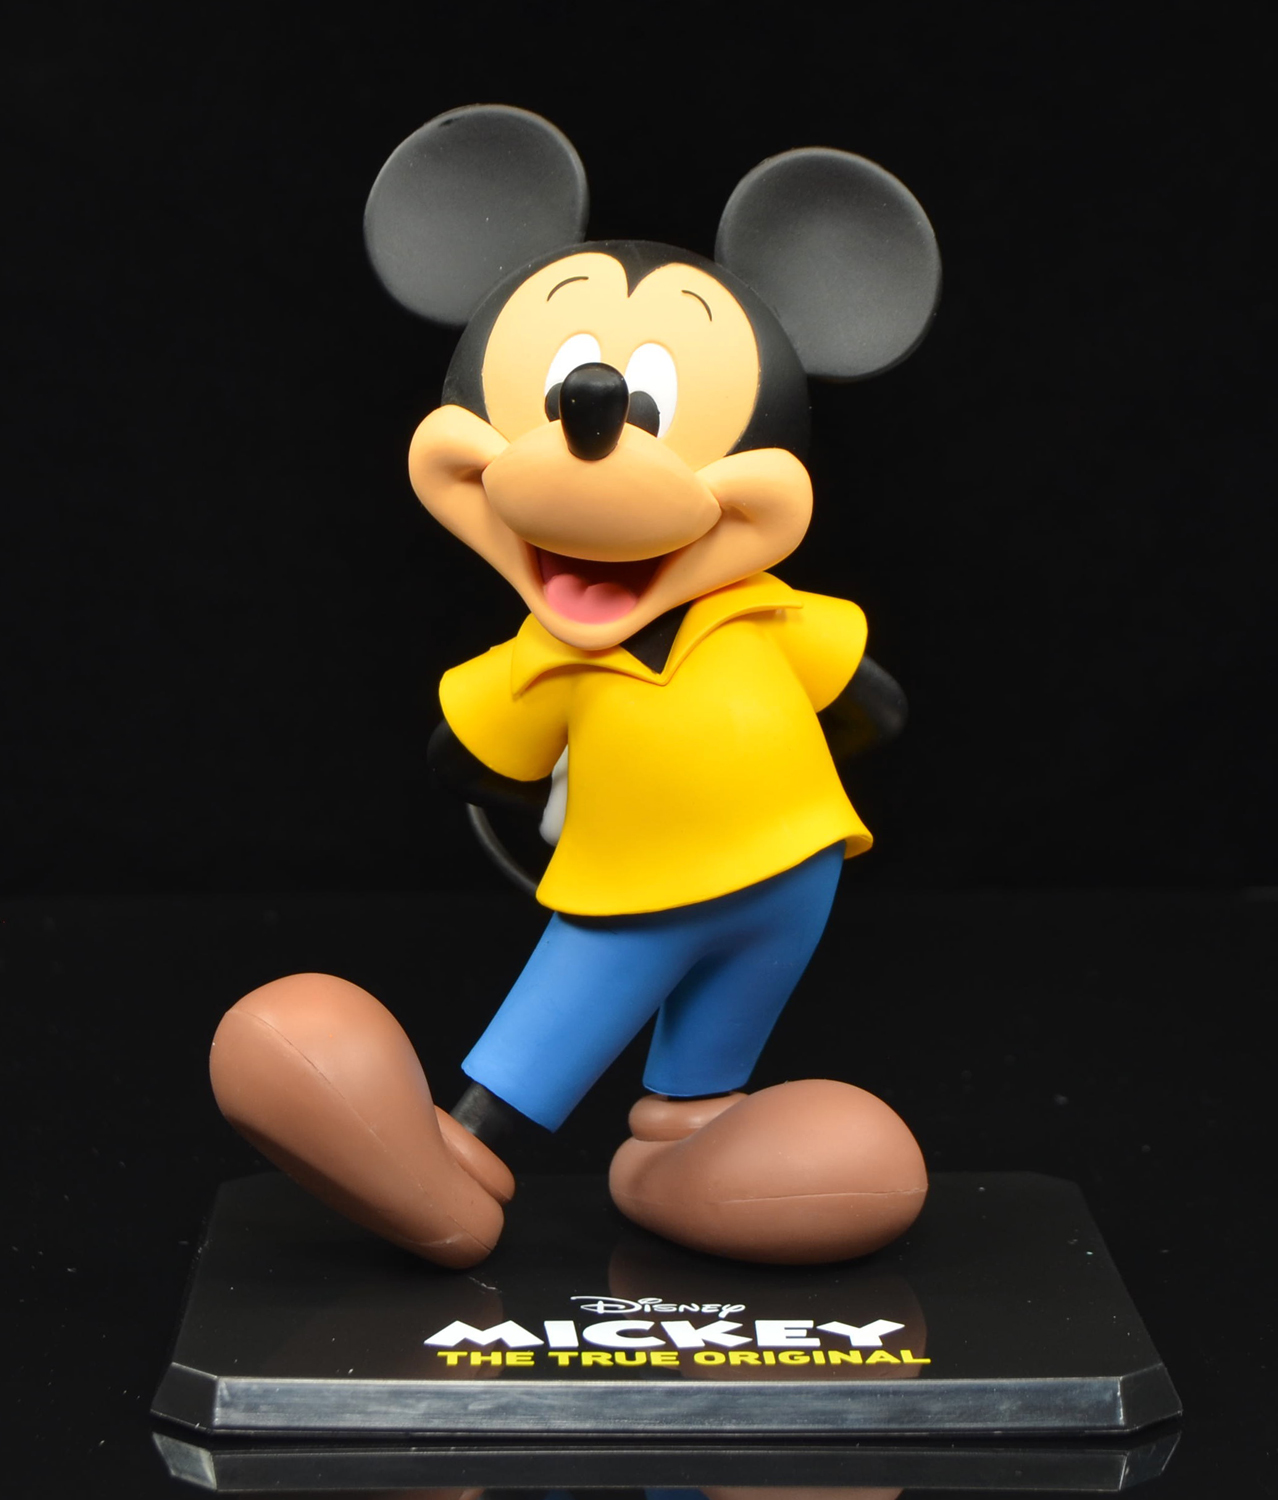 Disney Bandai 90 Jahre Mickey Mouse Figur 1980s version 